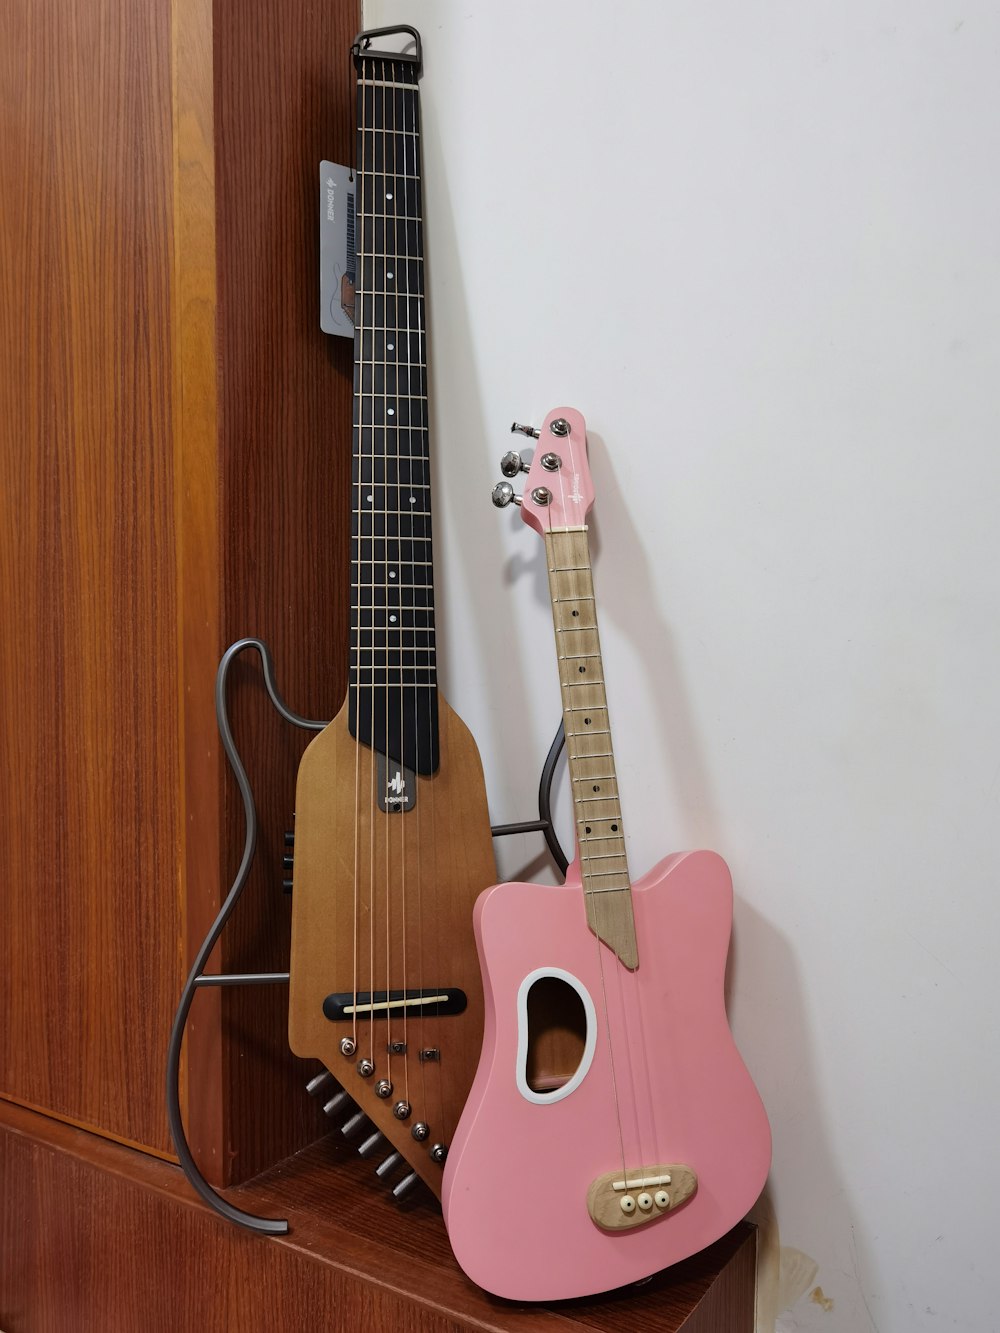 a pink ukulele and a pink ukulele sit on a shelf